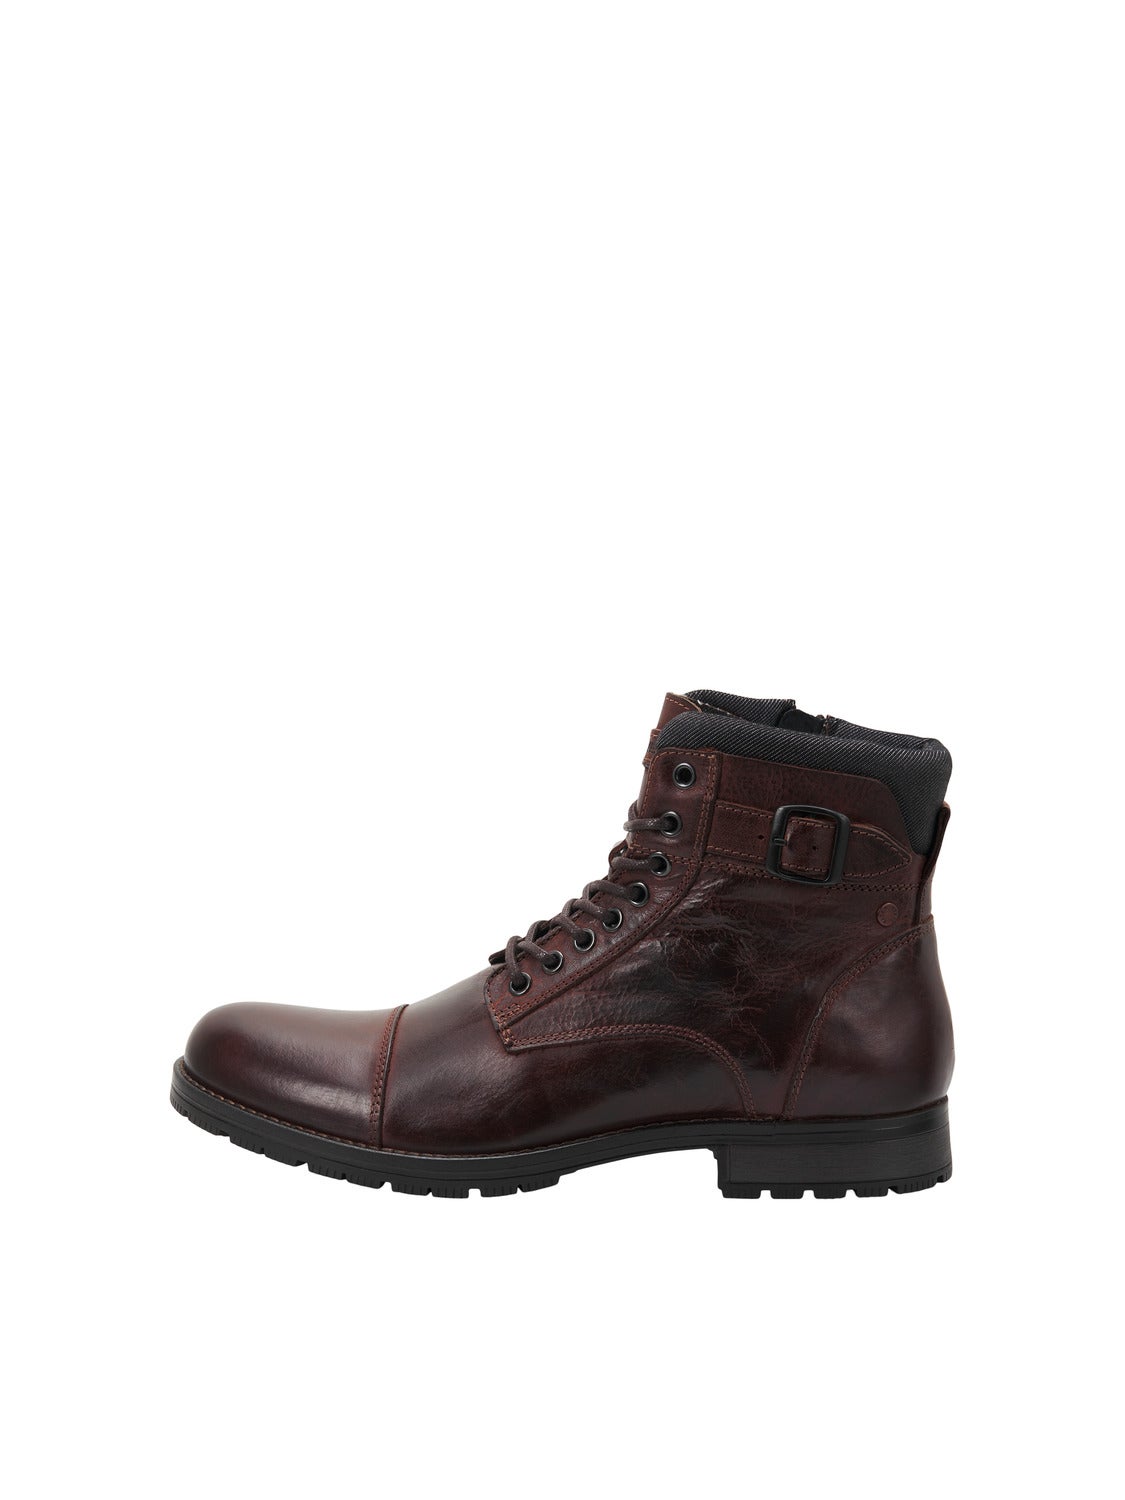 Mens JACK & JONES Leather Boots New Black Brown Lace Ups Nubuck Sale Size  7-12